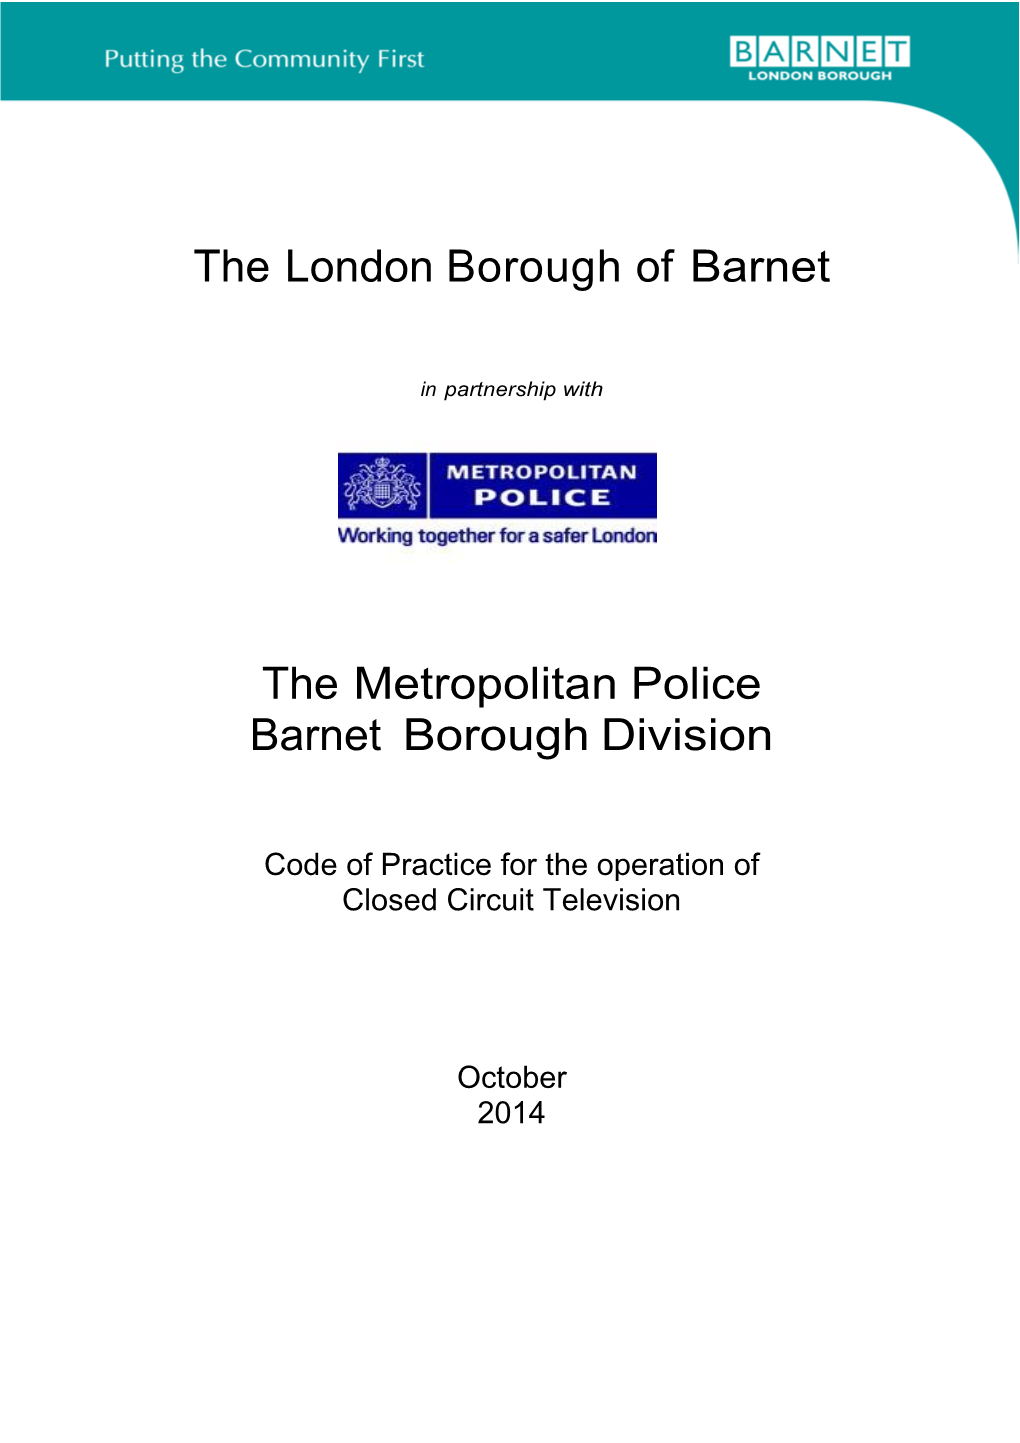 The London Borough of Barnet the Metropolitan Police Barnet Borough